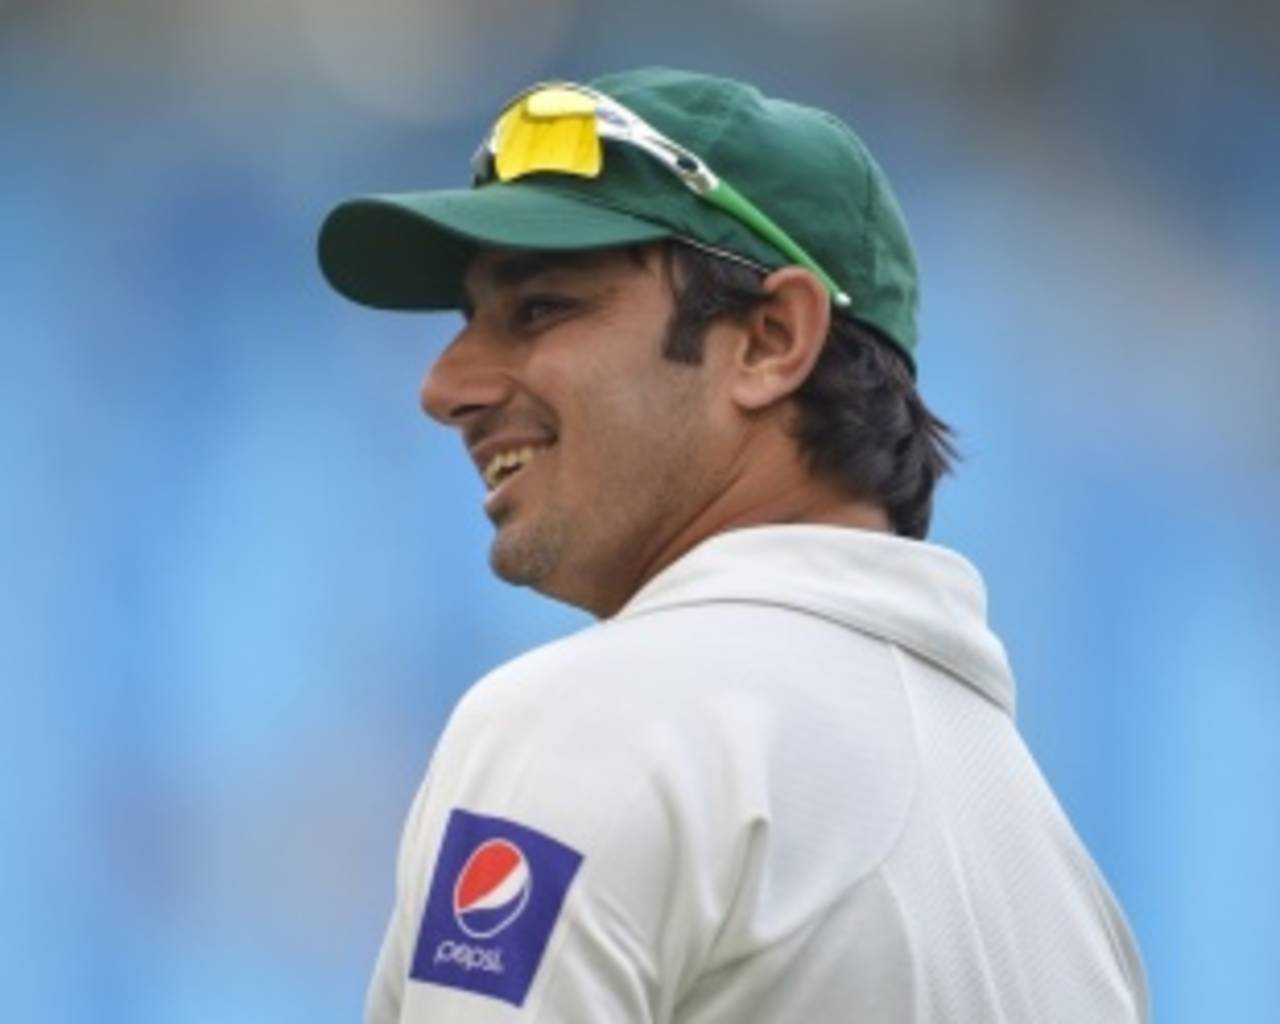 Saeed Ajmal smiles after taking a wicket, Pakistan v Sri Lanka, 2nd Test, Dubai, 3rd day, January 10, 2014